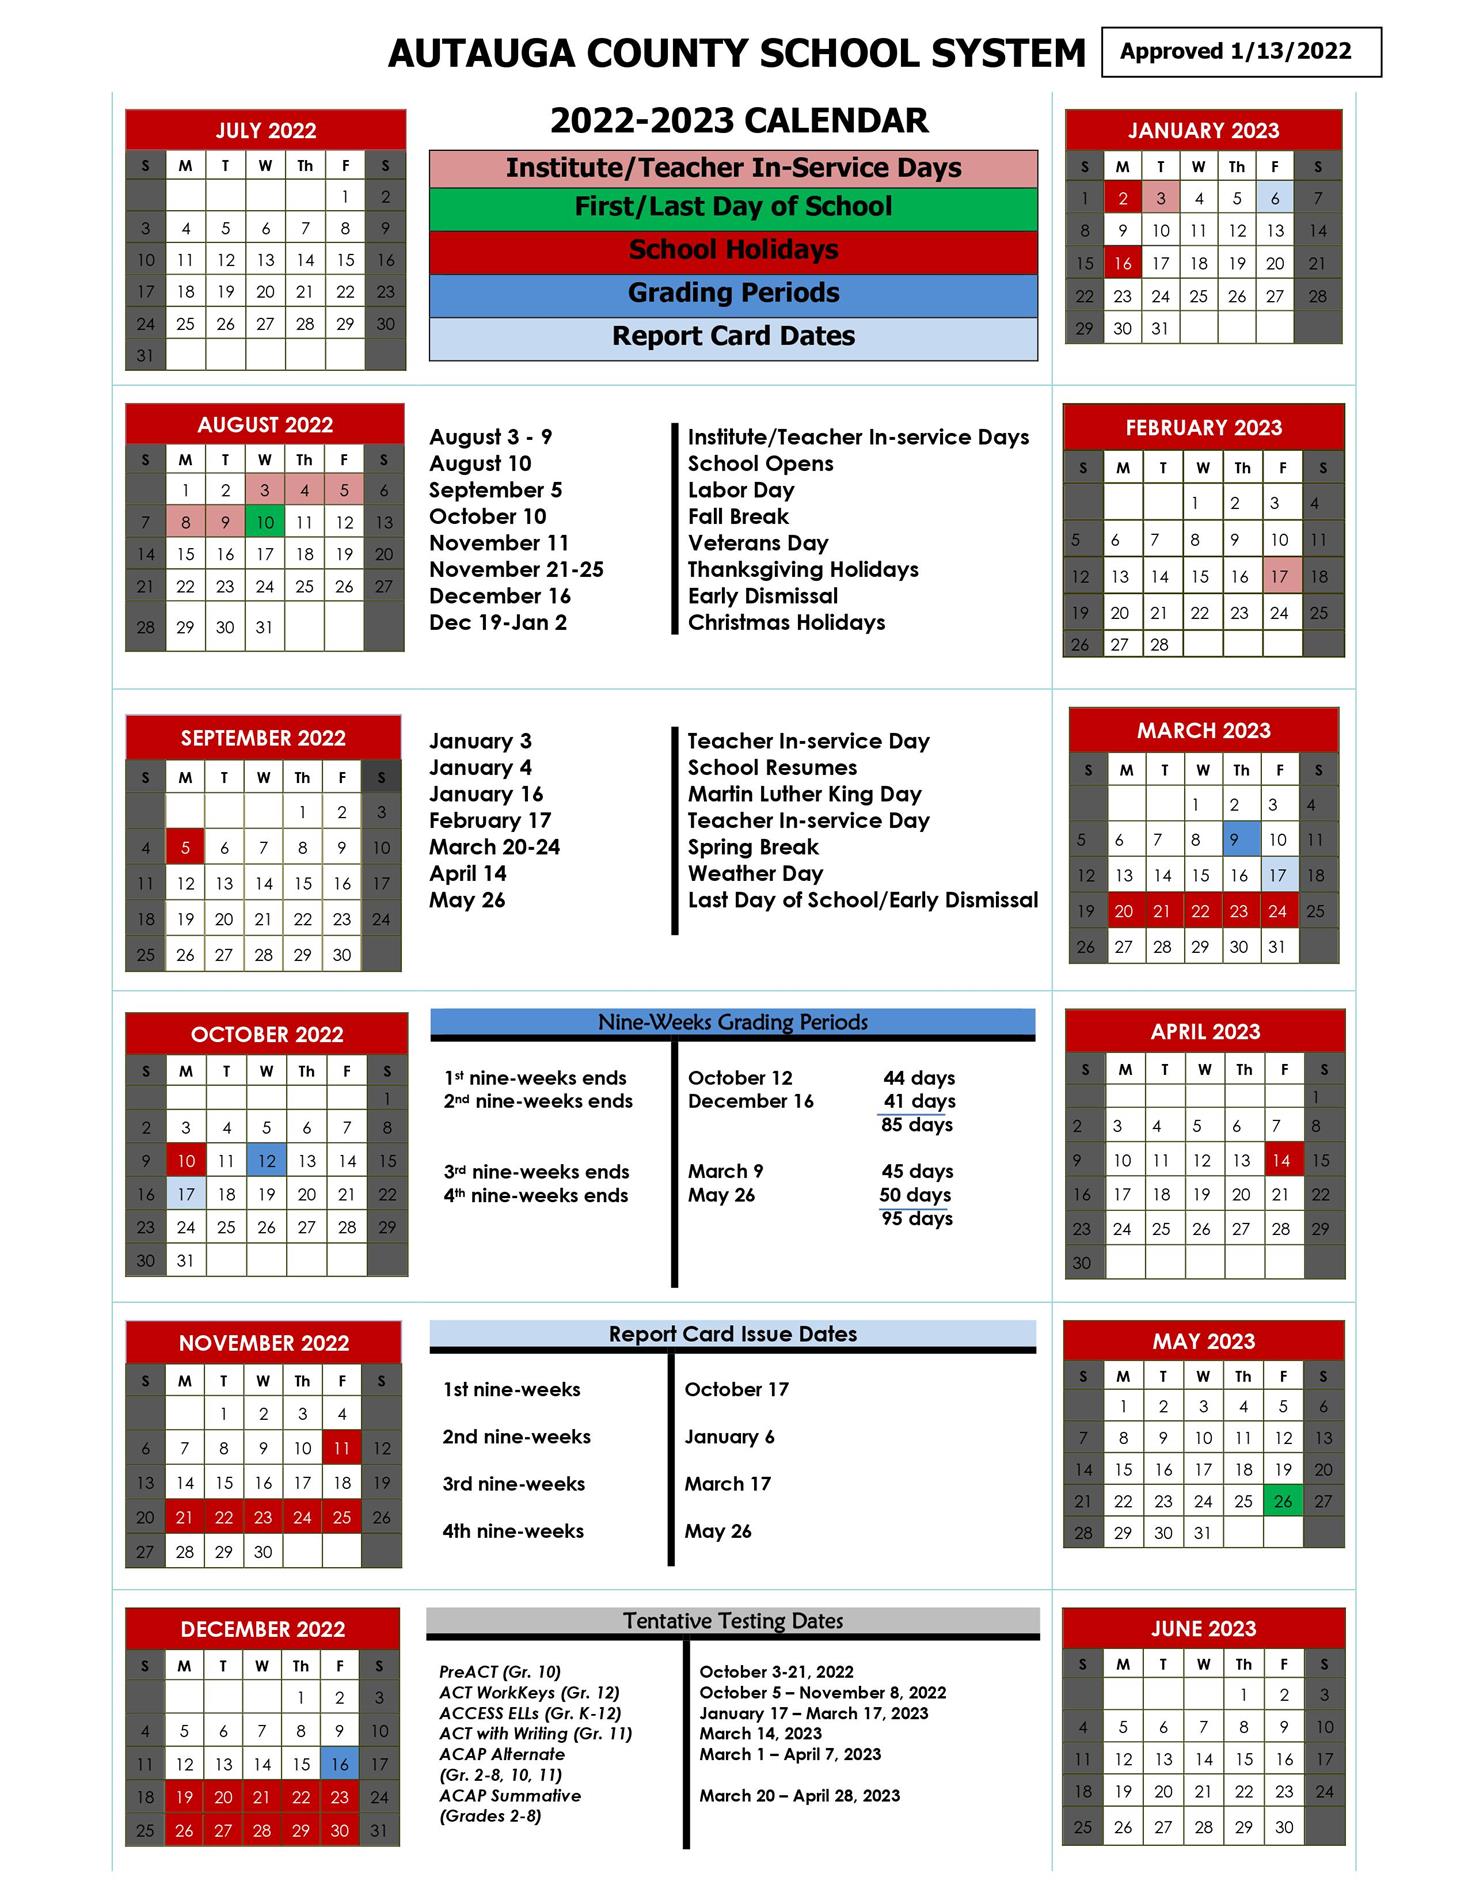 approved school calendar